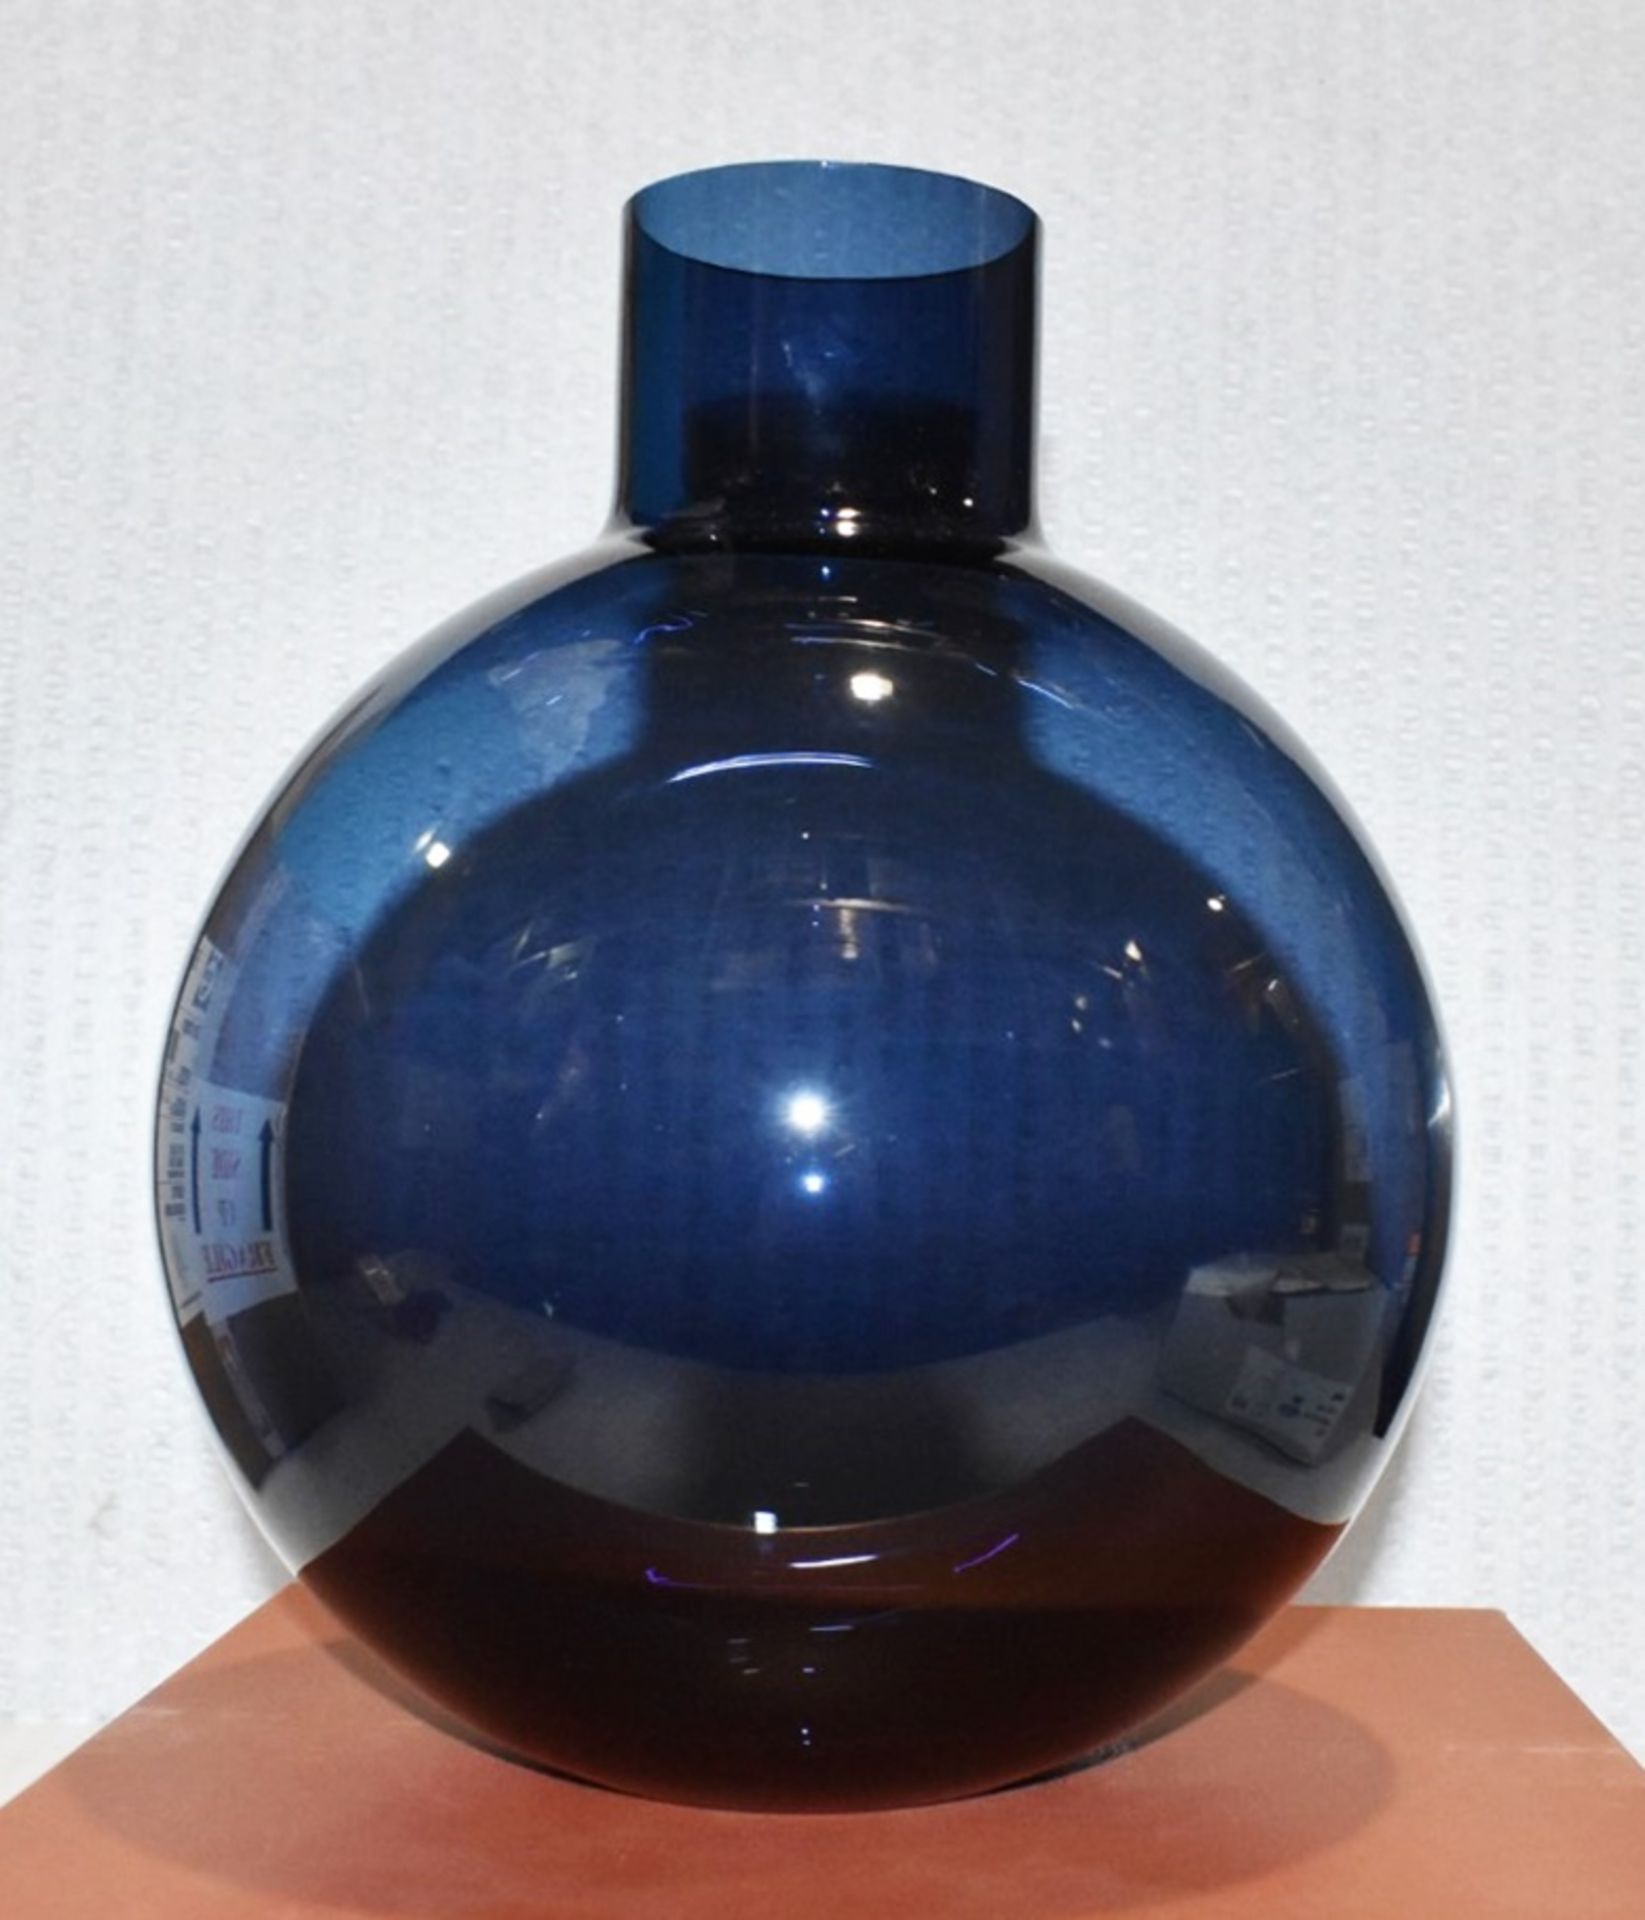 1 x POLTRONA FRAU 'Pallo Pot' High Quality Blown Glass Vase in Midnight Blue - RRP £1,080 *Signed* - Bild 2 aus 7